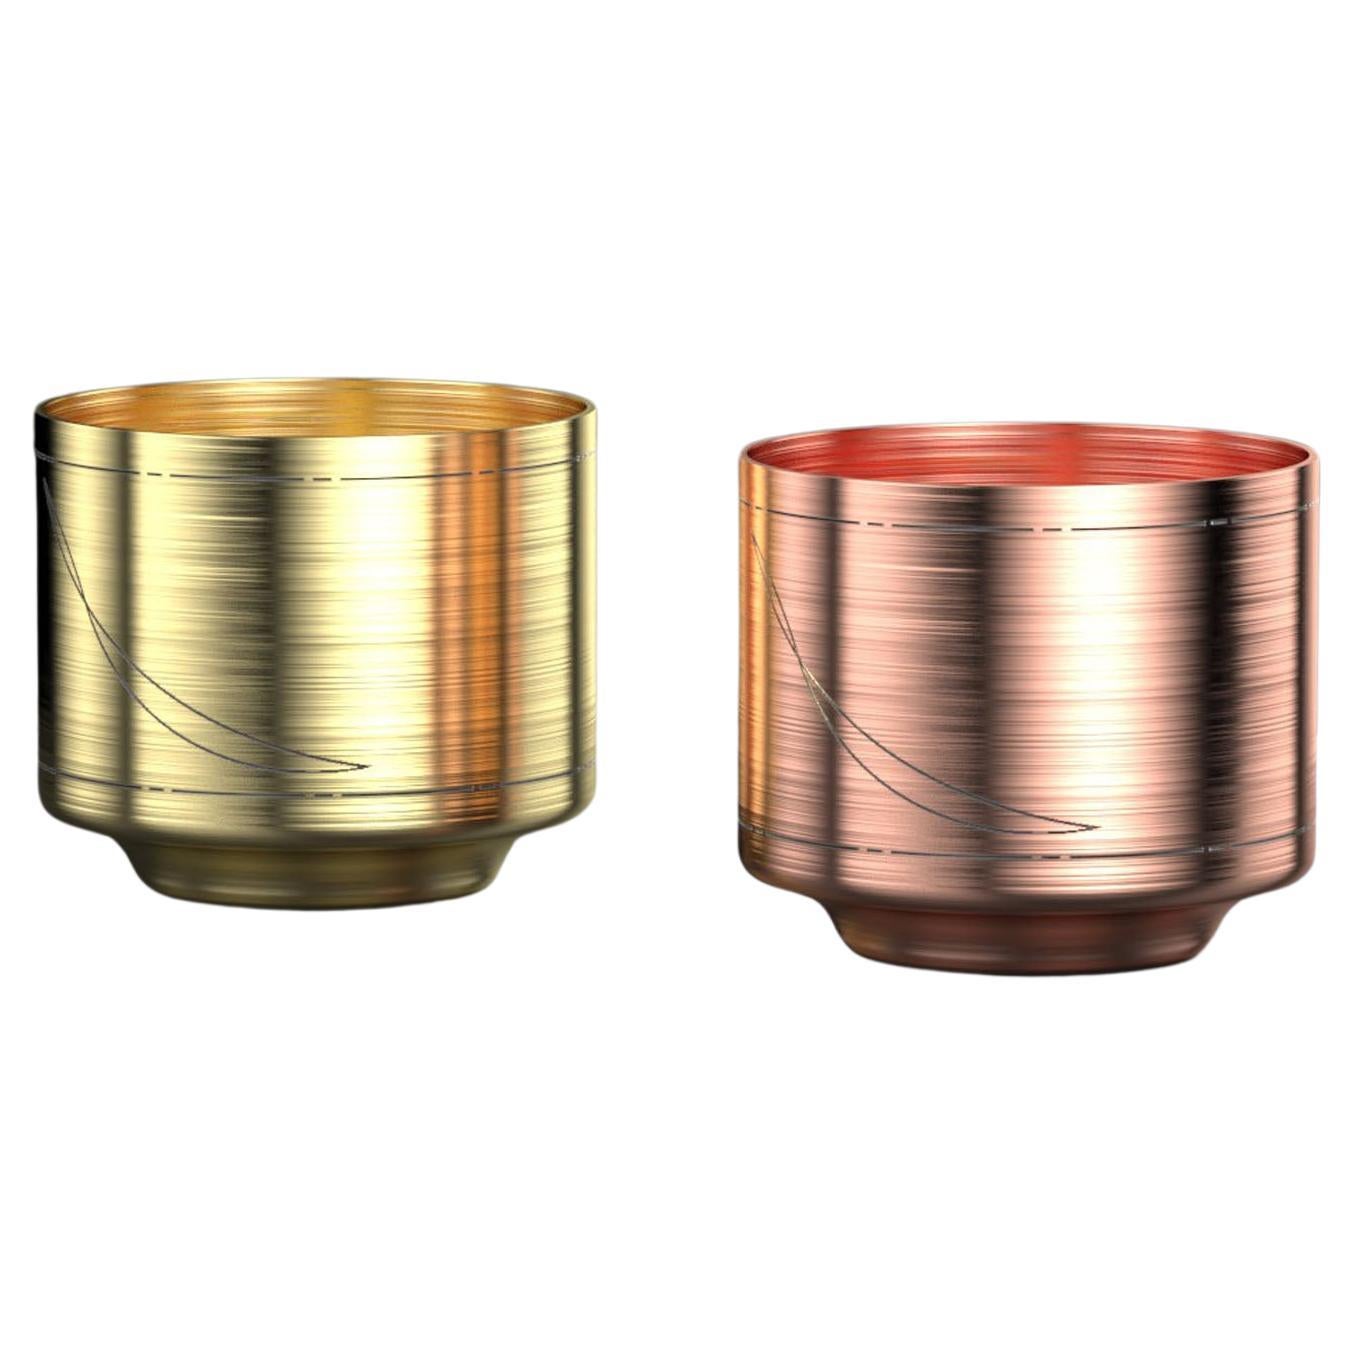 Edimate Kerzenhalter aus echtem Kupfer/Brass, konkaver Sockel im Angebot